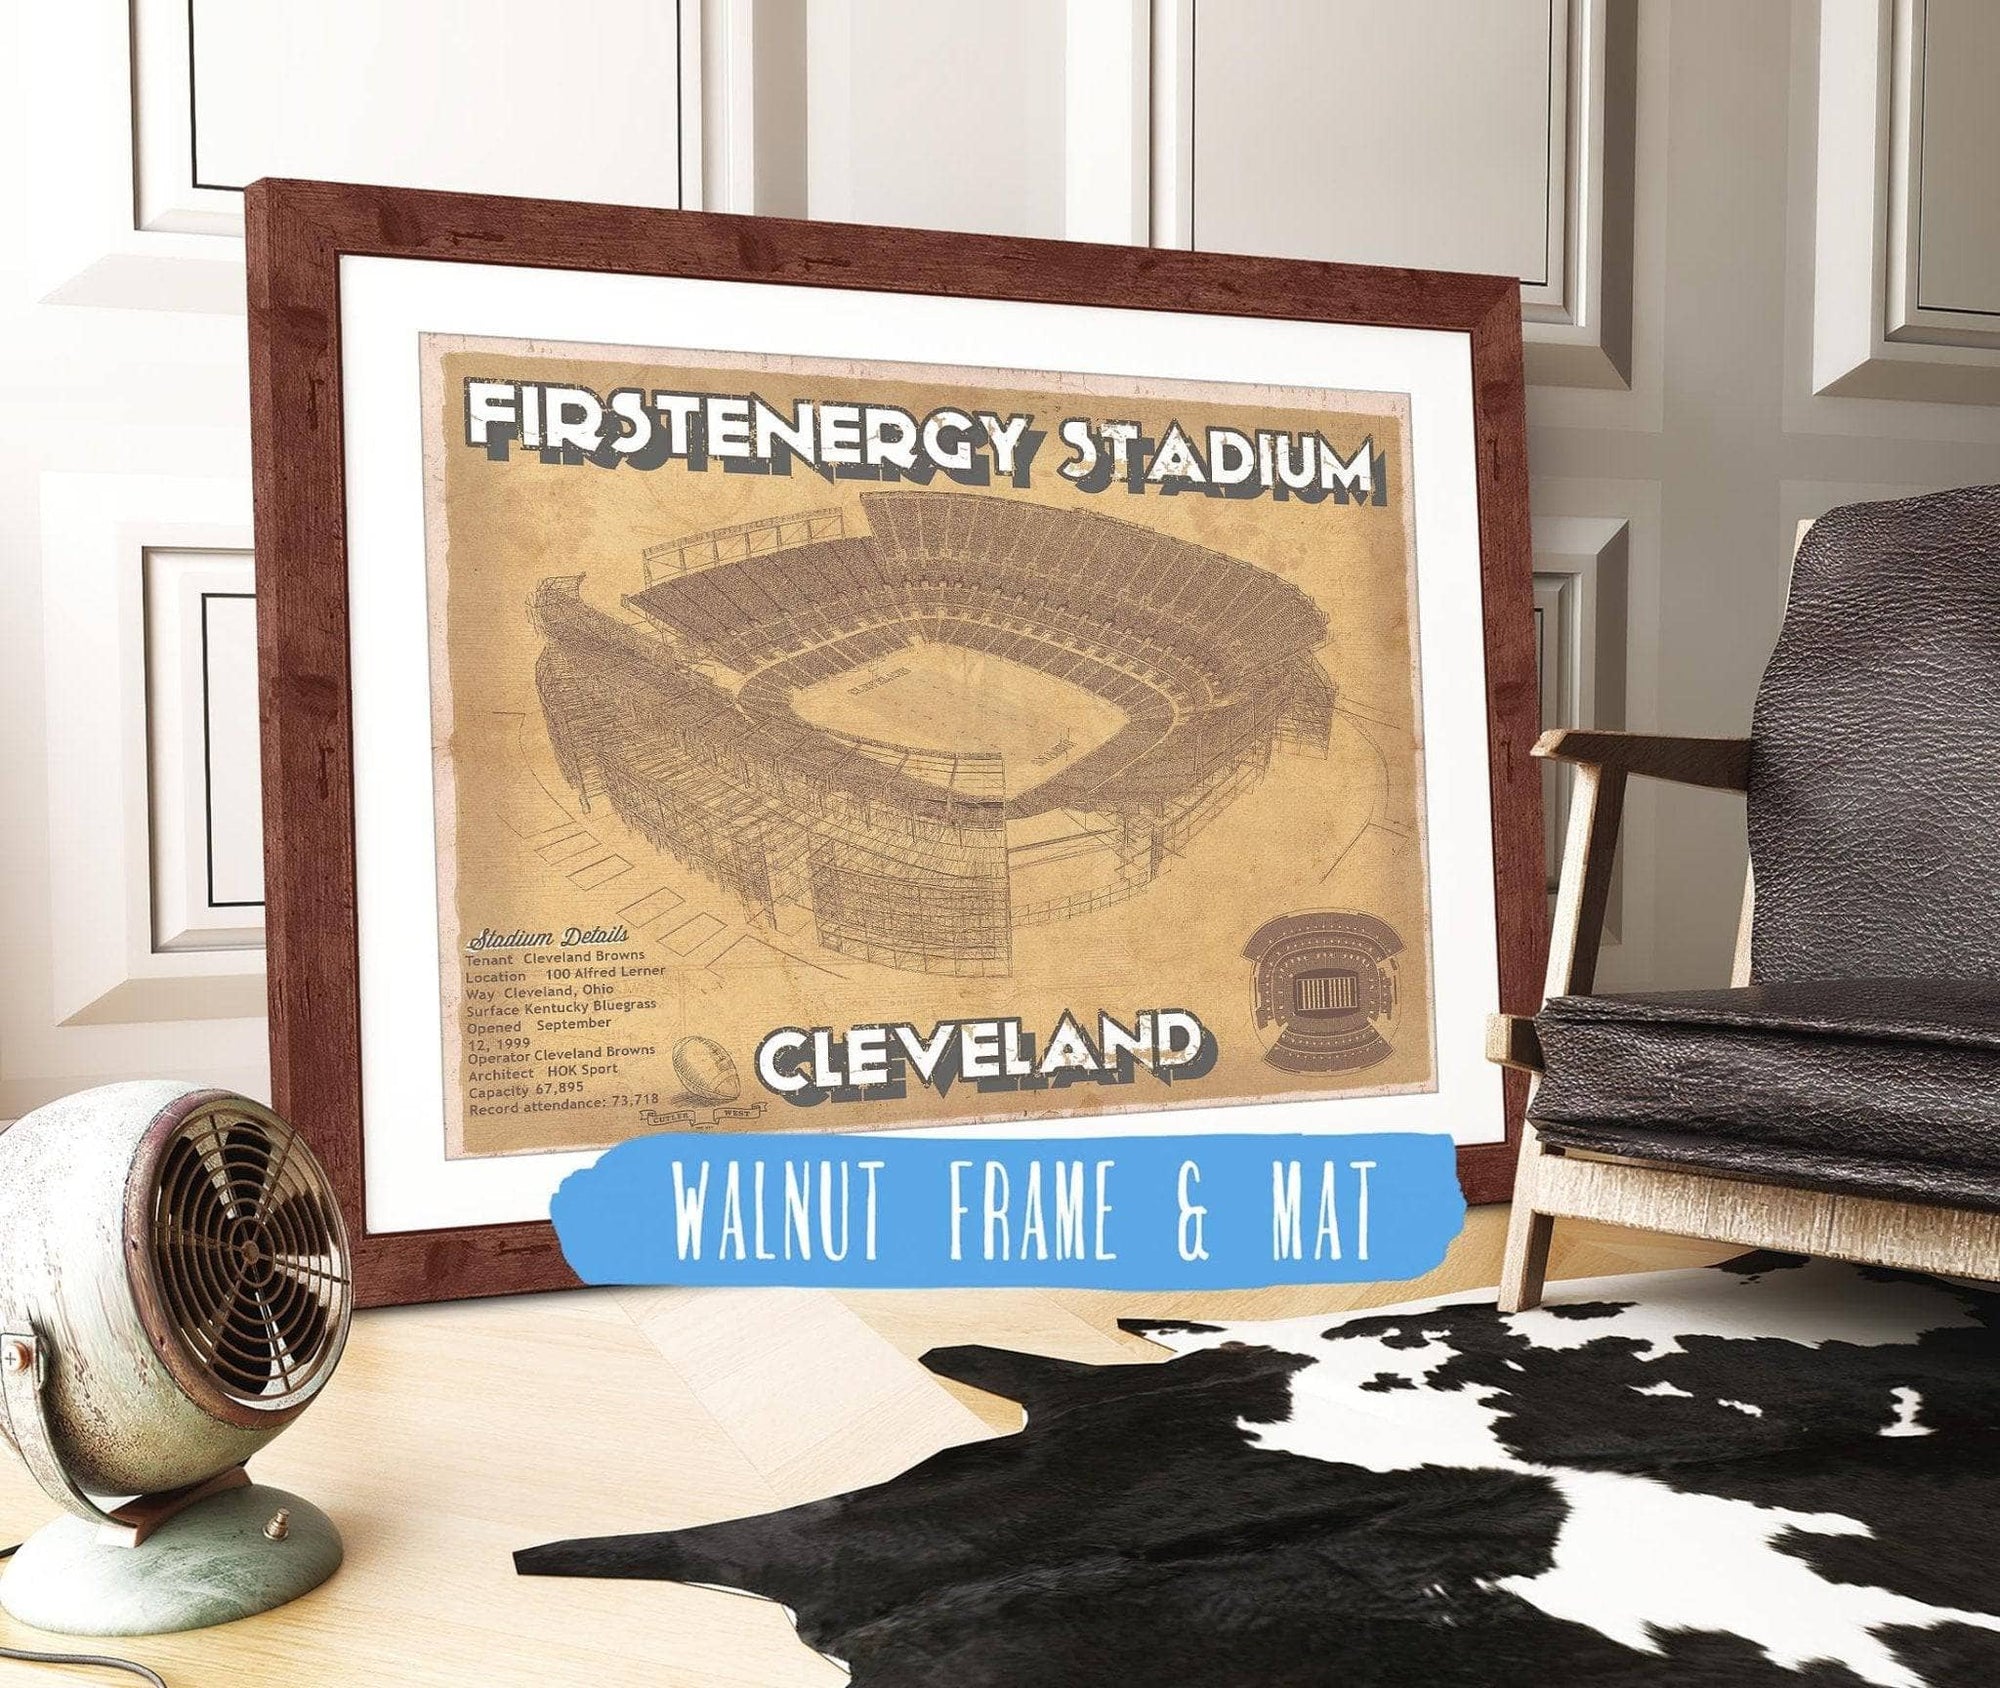 Cutler West Pro Football Collection 14" x 11" / Walnut Frame & Mat Cleveland Browns FirstEnergy Stadium - Vintage Football Print 698892938_60225